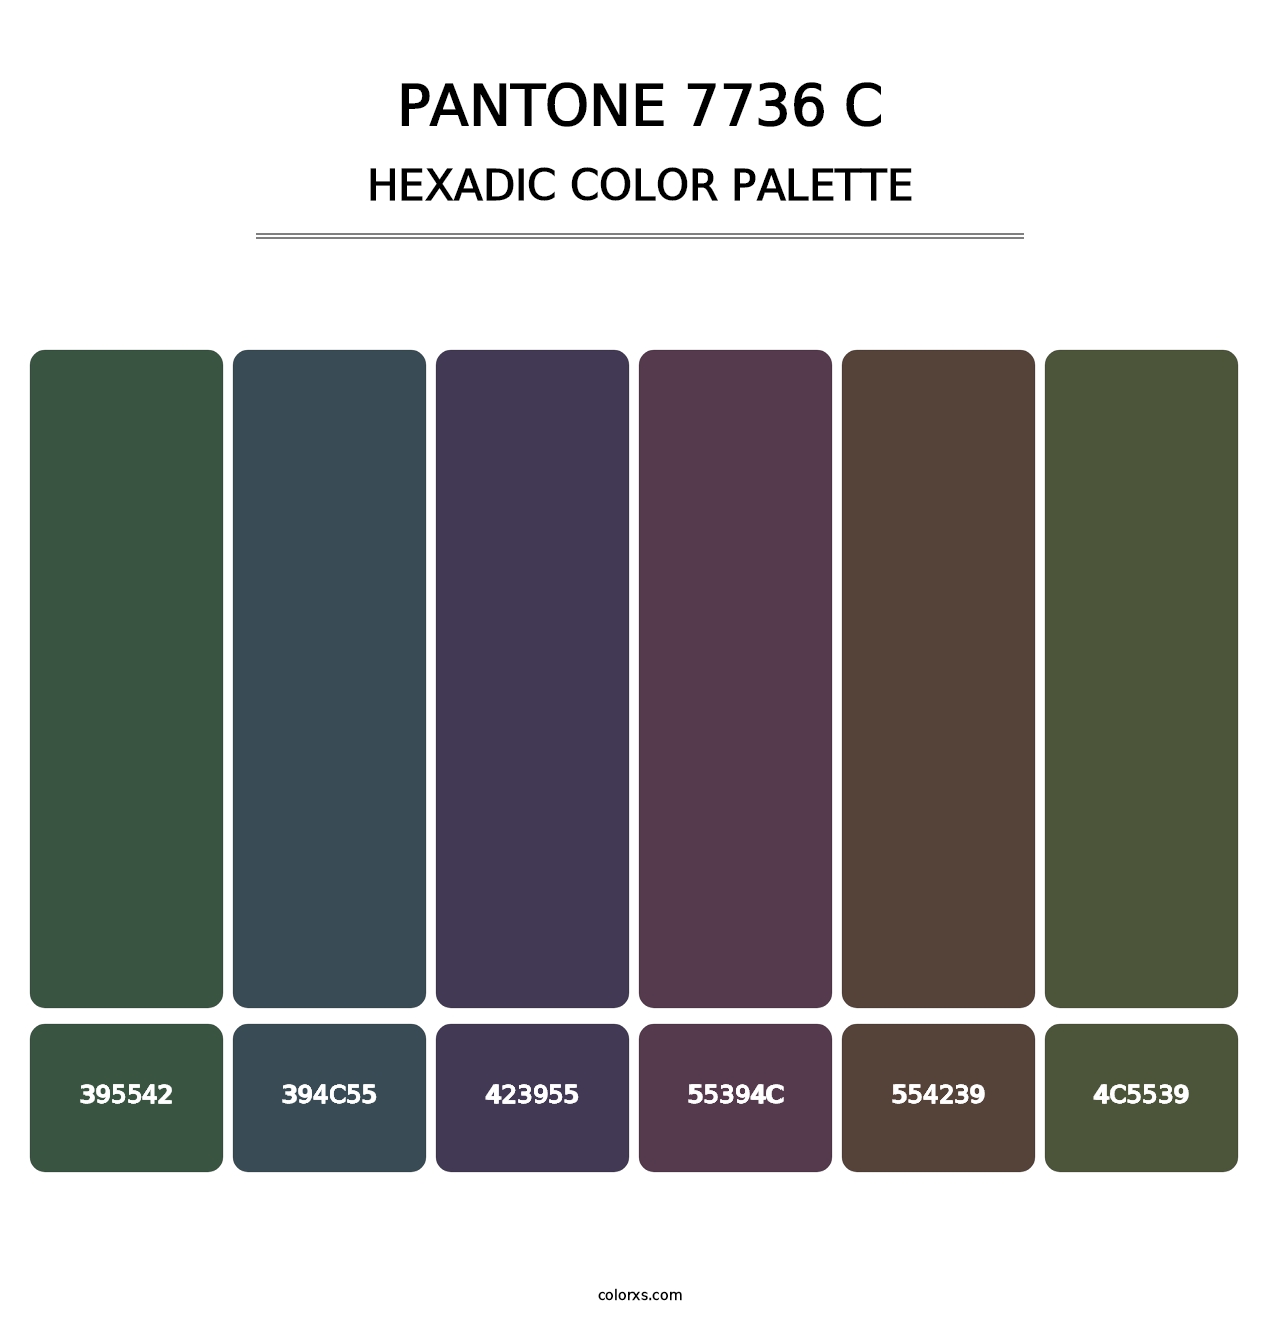 PANTONE 7736 C - Hexadic Color Palette